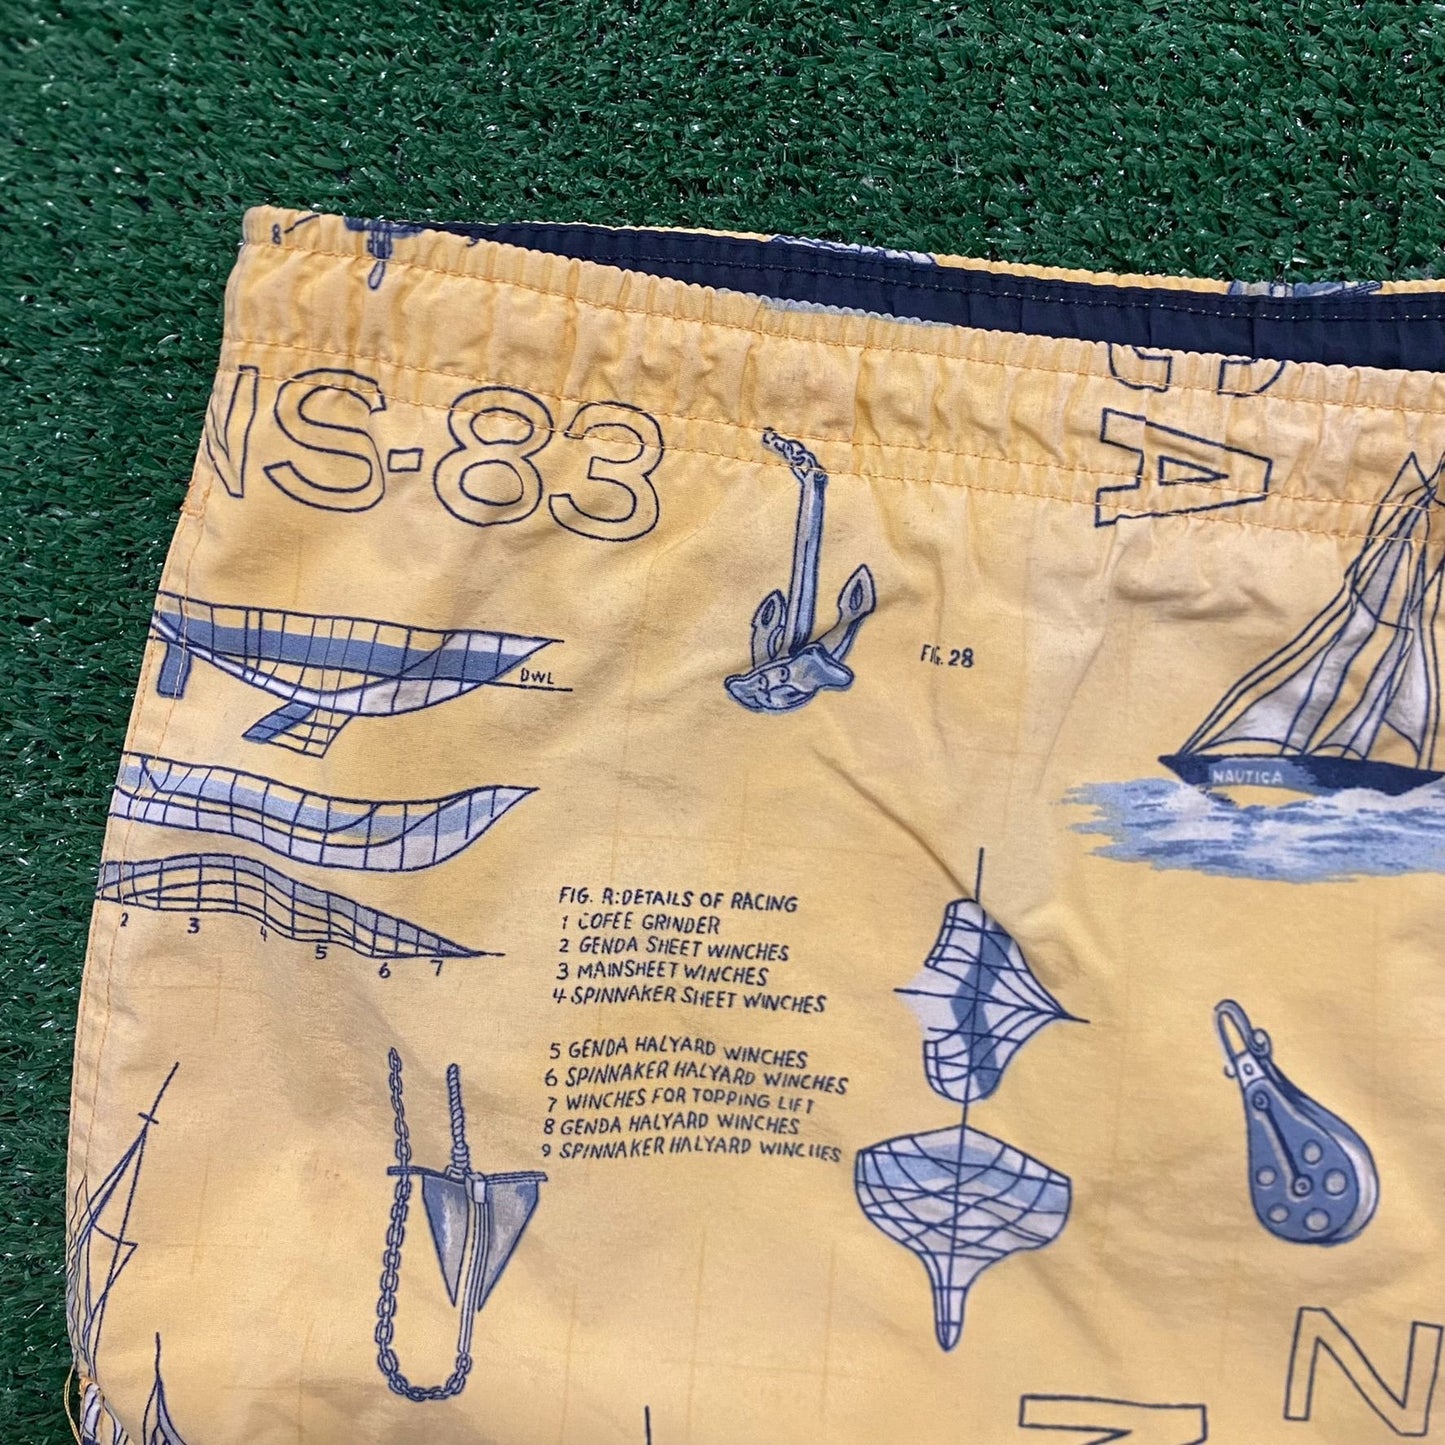 Nautica Swimwear Sailboats Sailing Vintage 90s Swim Trunks